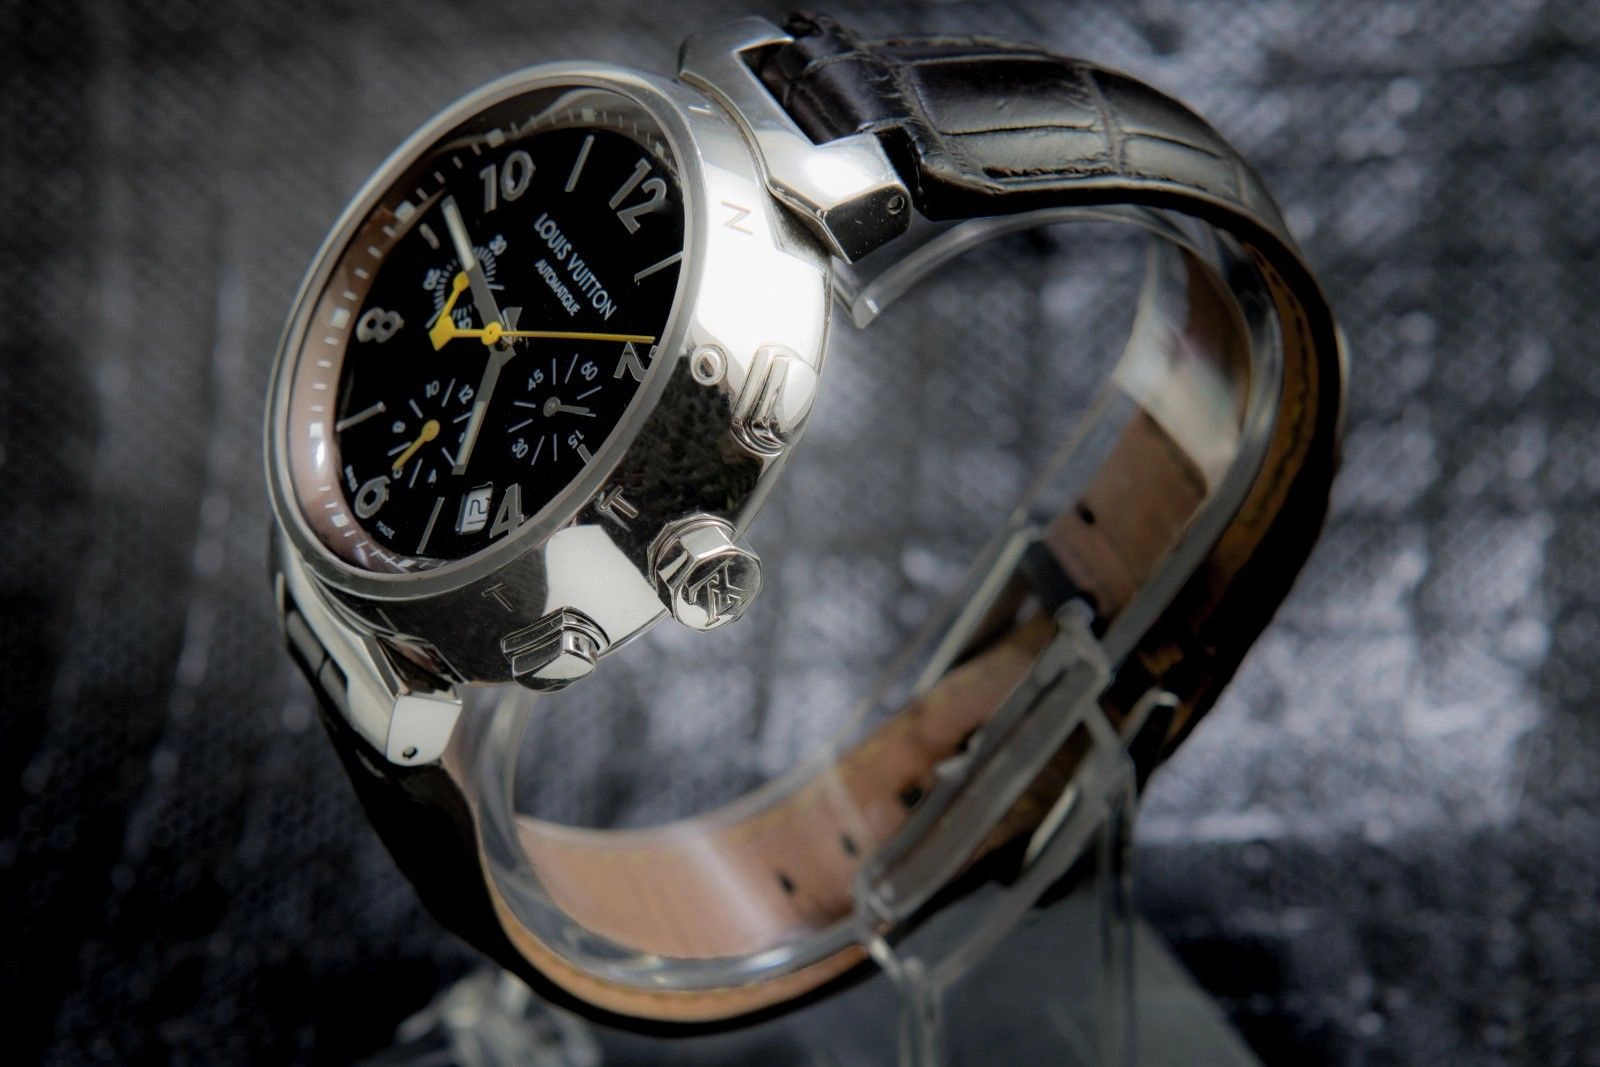 Louis Vuitton - Tambour In Black LV277 Chronograph - NO - Catawiki